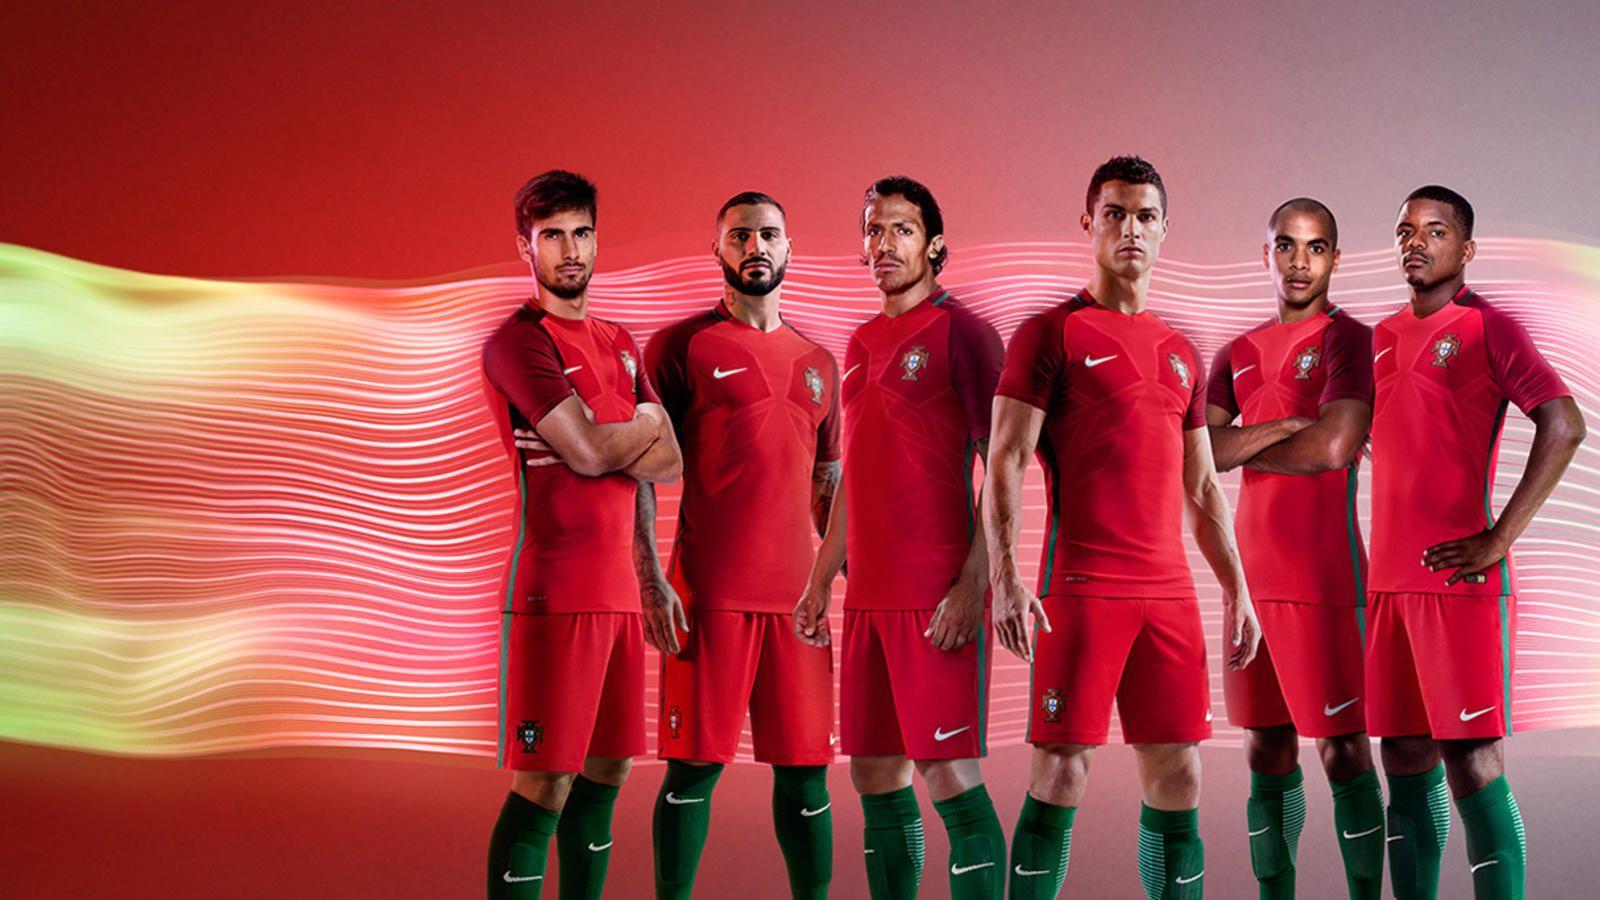 Portugal 2016 National Football Kits